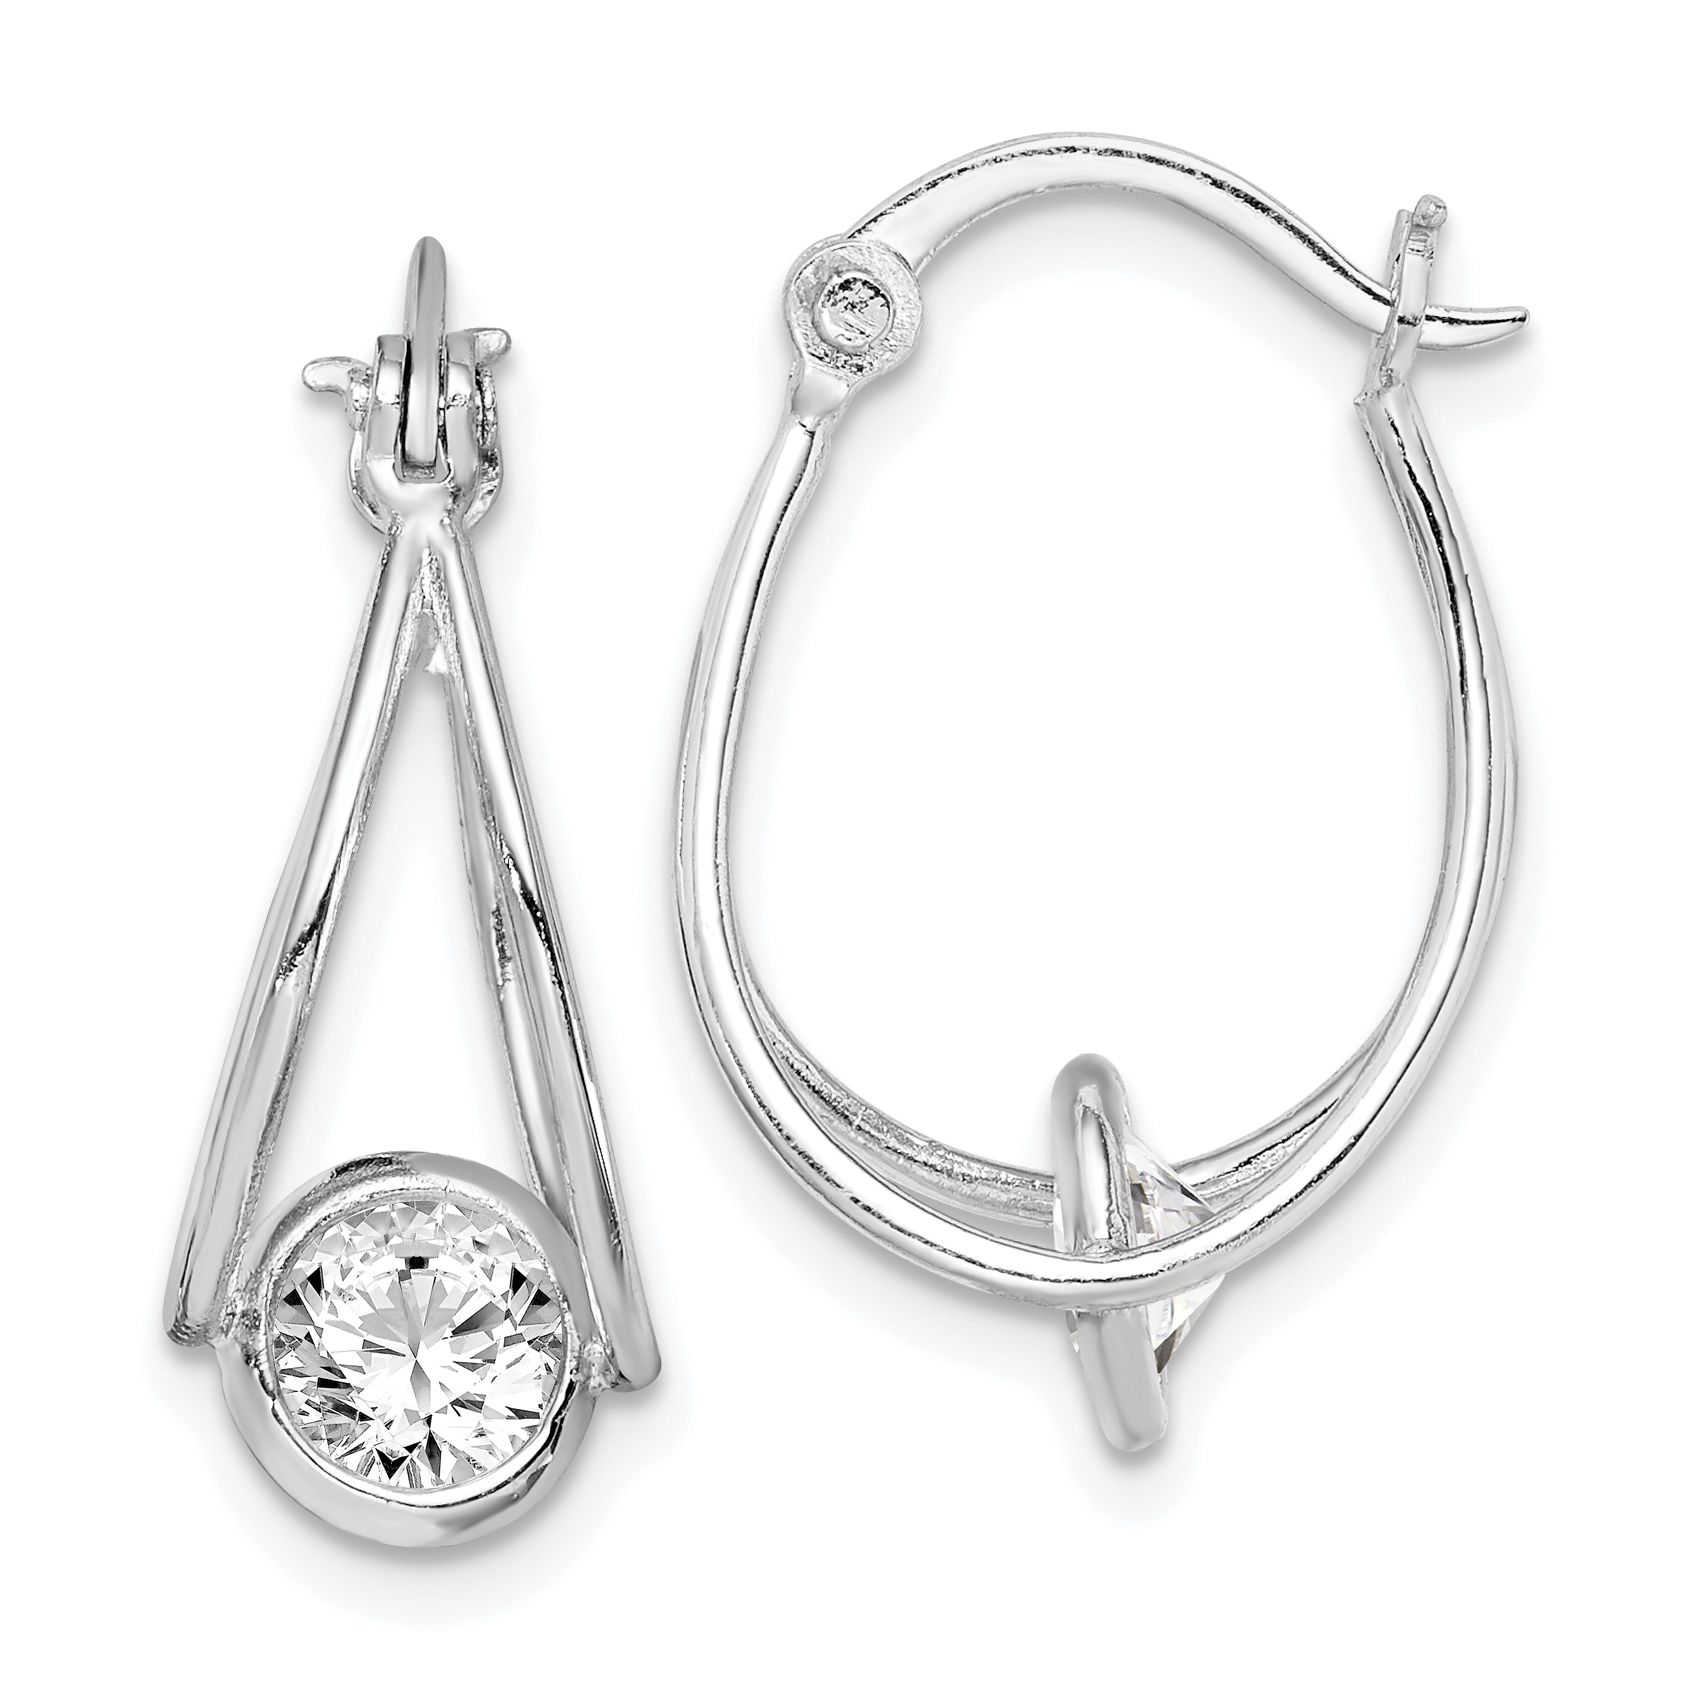 Primal Silver Sterling Silver Rhodium-plated Cubic Zirconia Double Hoop Earrings - image 1 of 5